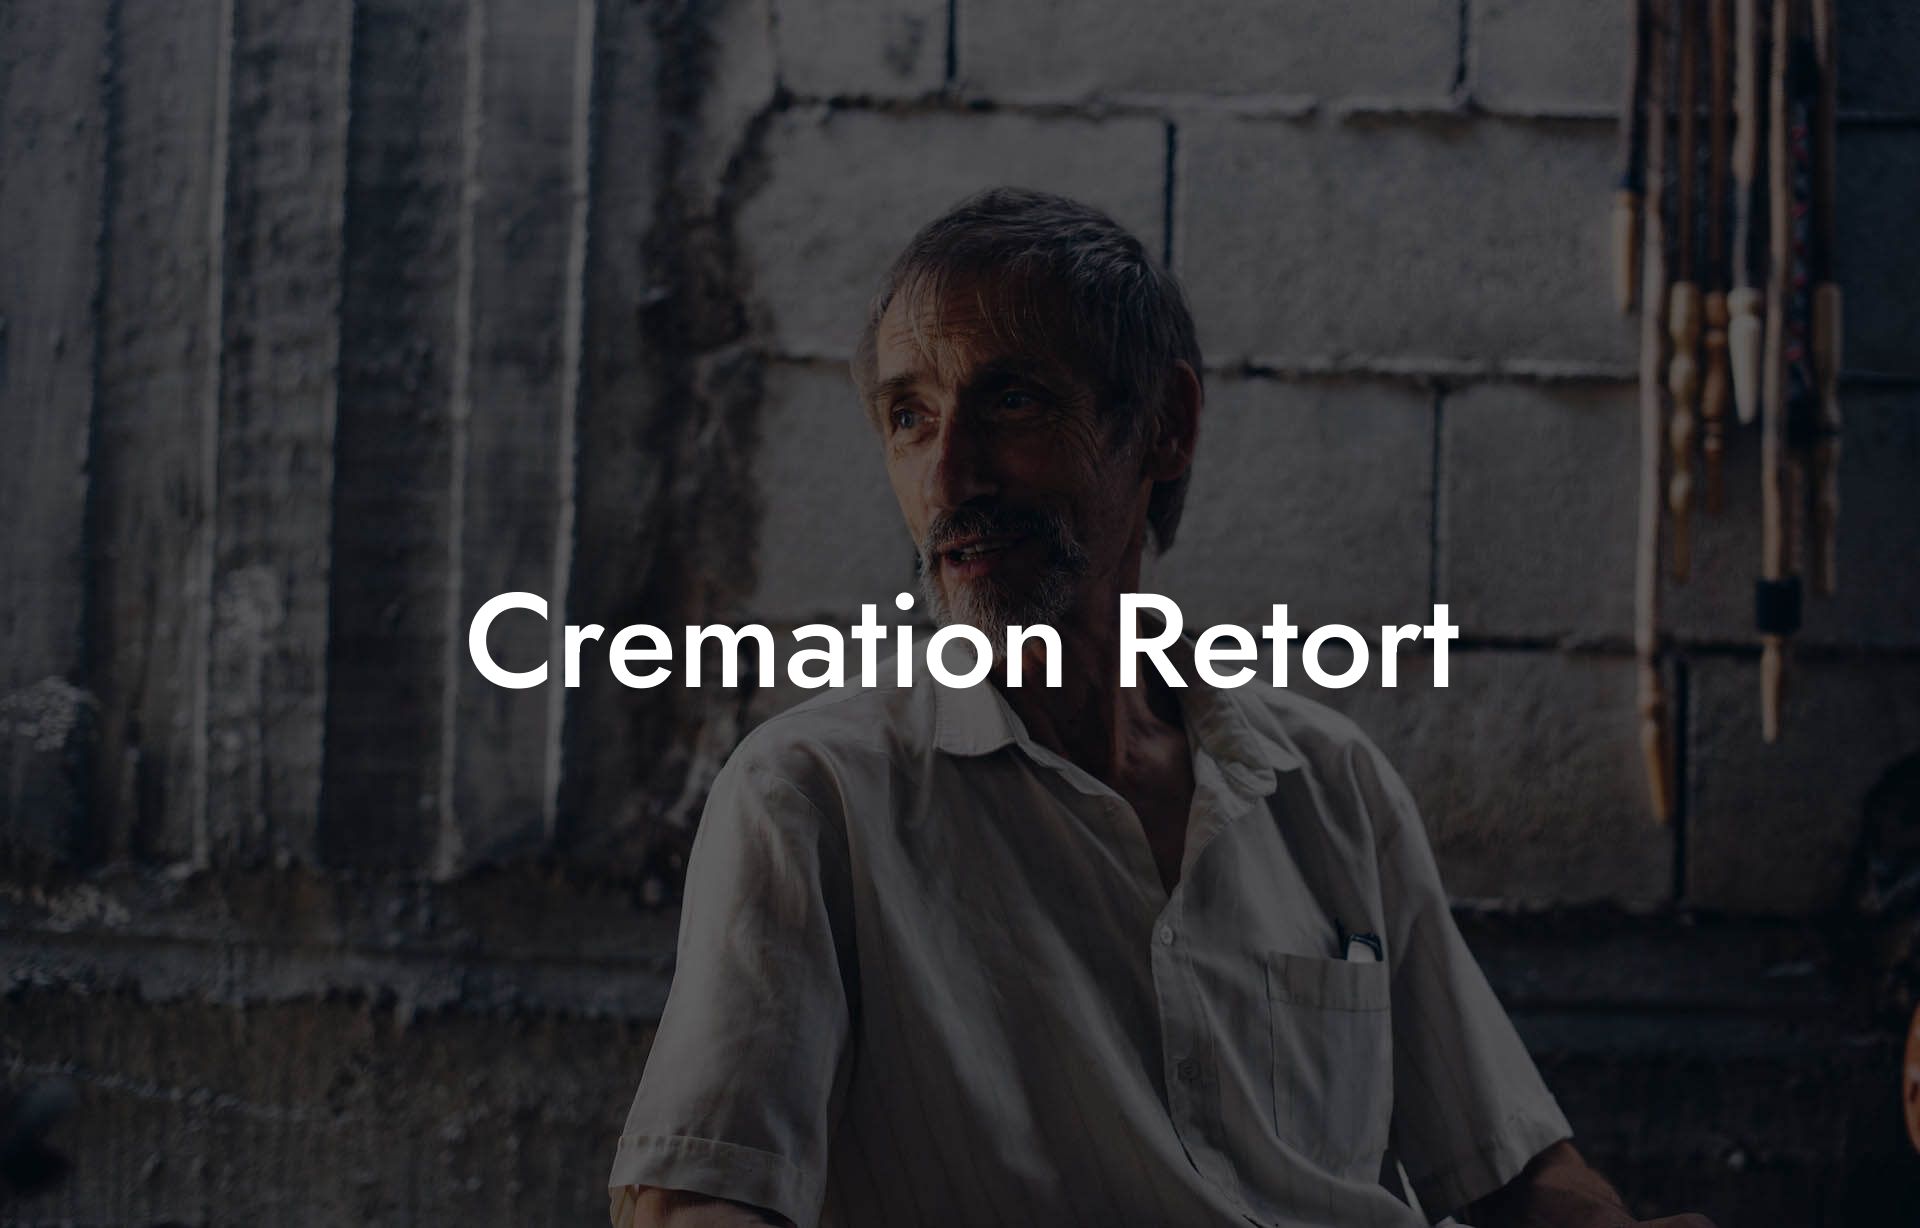 Cremation Retort